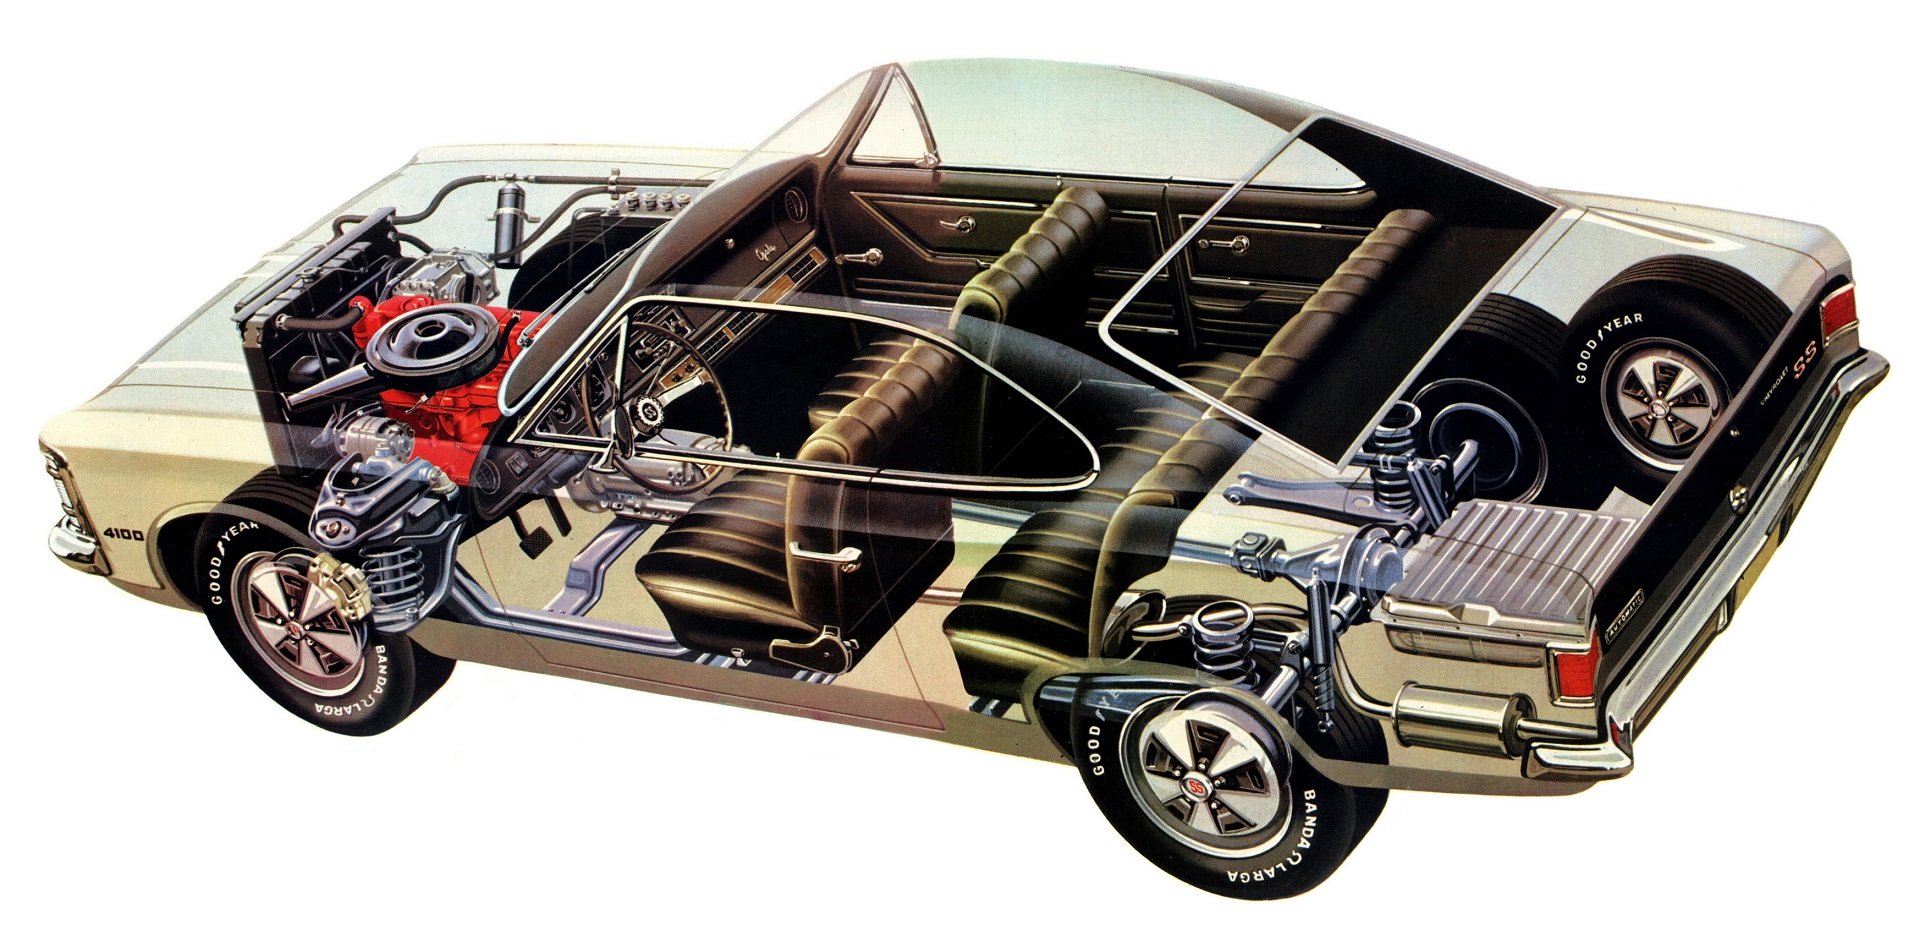 chevrolet, Opala, Ss, 4100, 1973, Cars, Technical, Cutaway Wallpaper